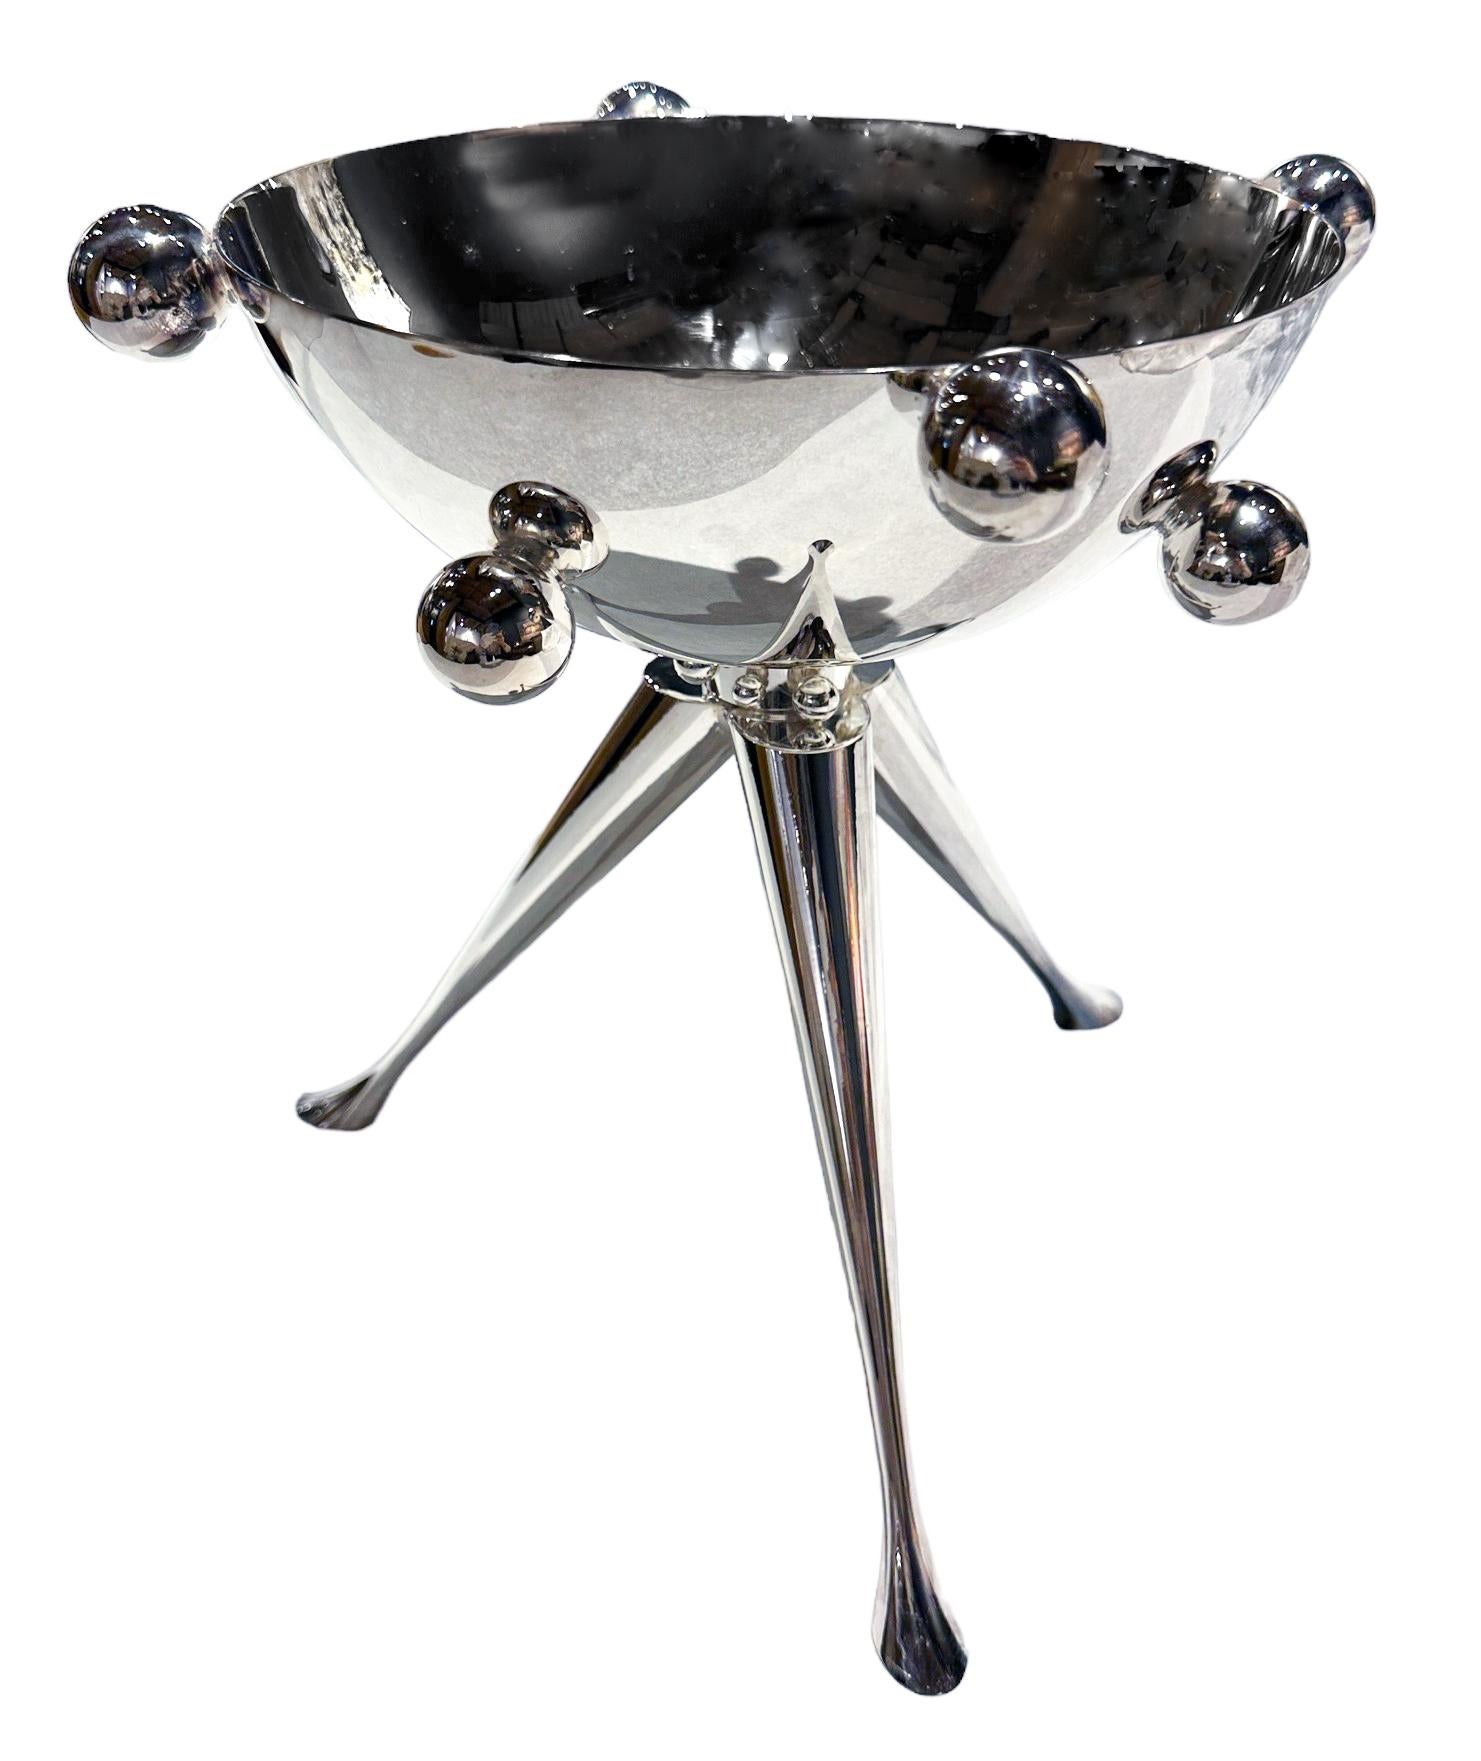 Modern Multifunctional Silver Vessel, Sculptural Object by Raju Peddada - 